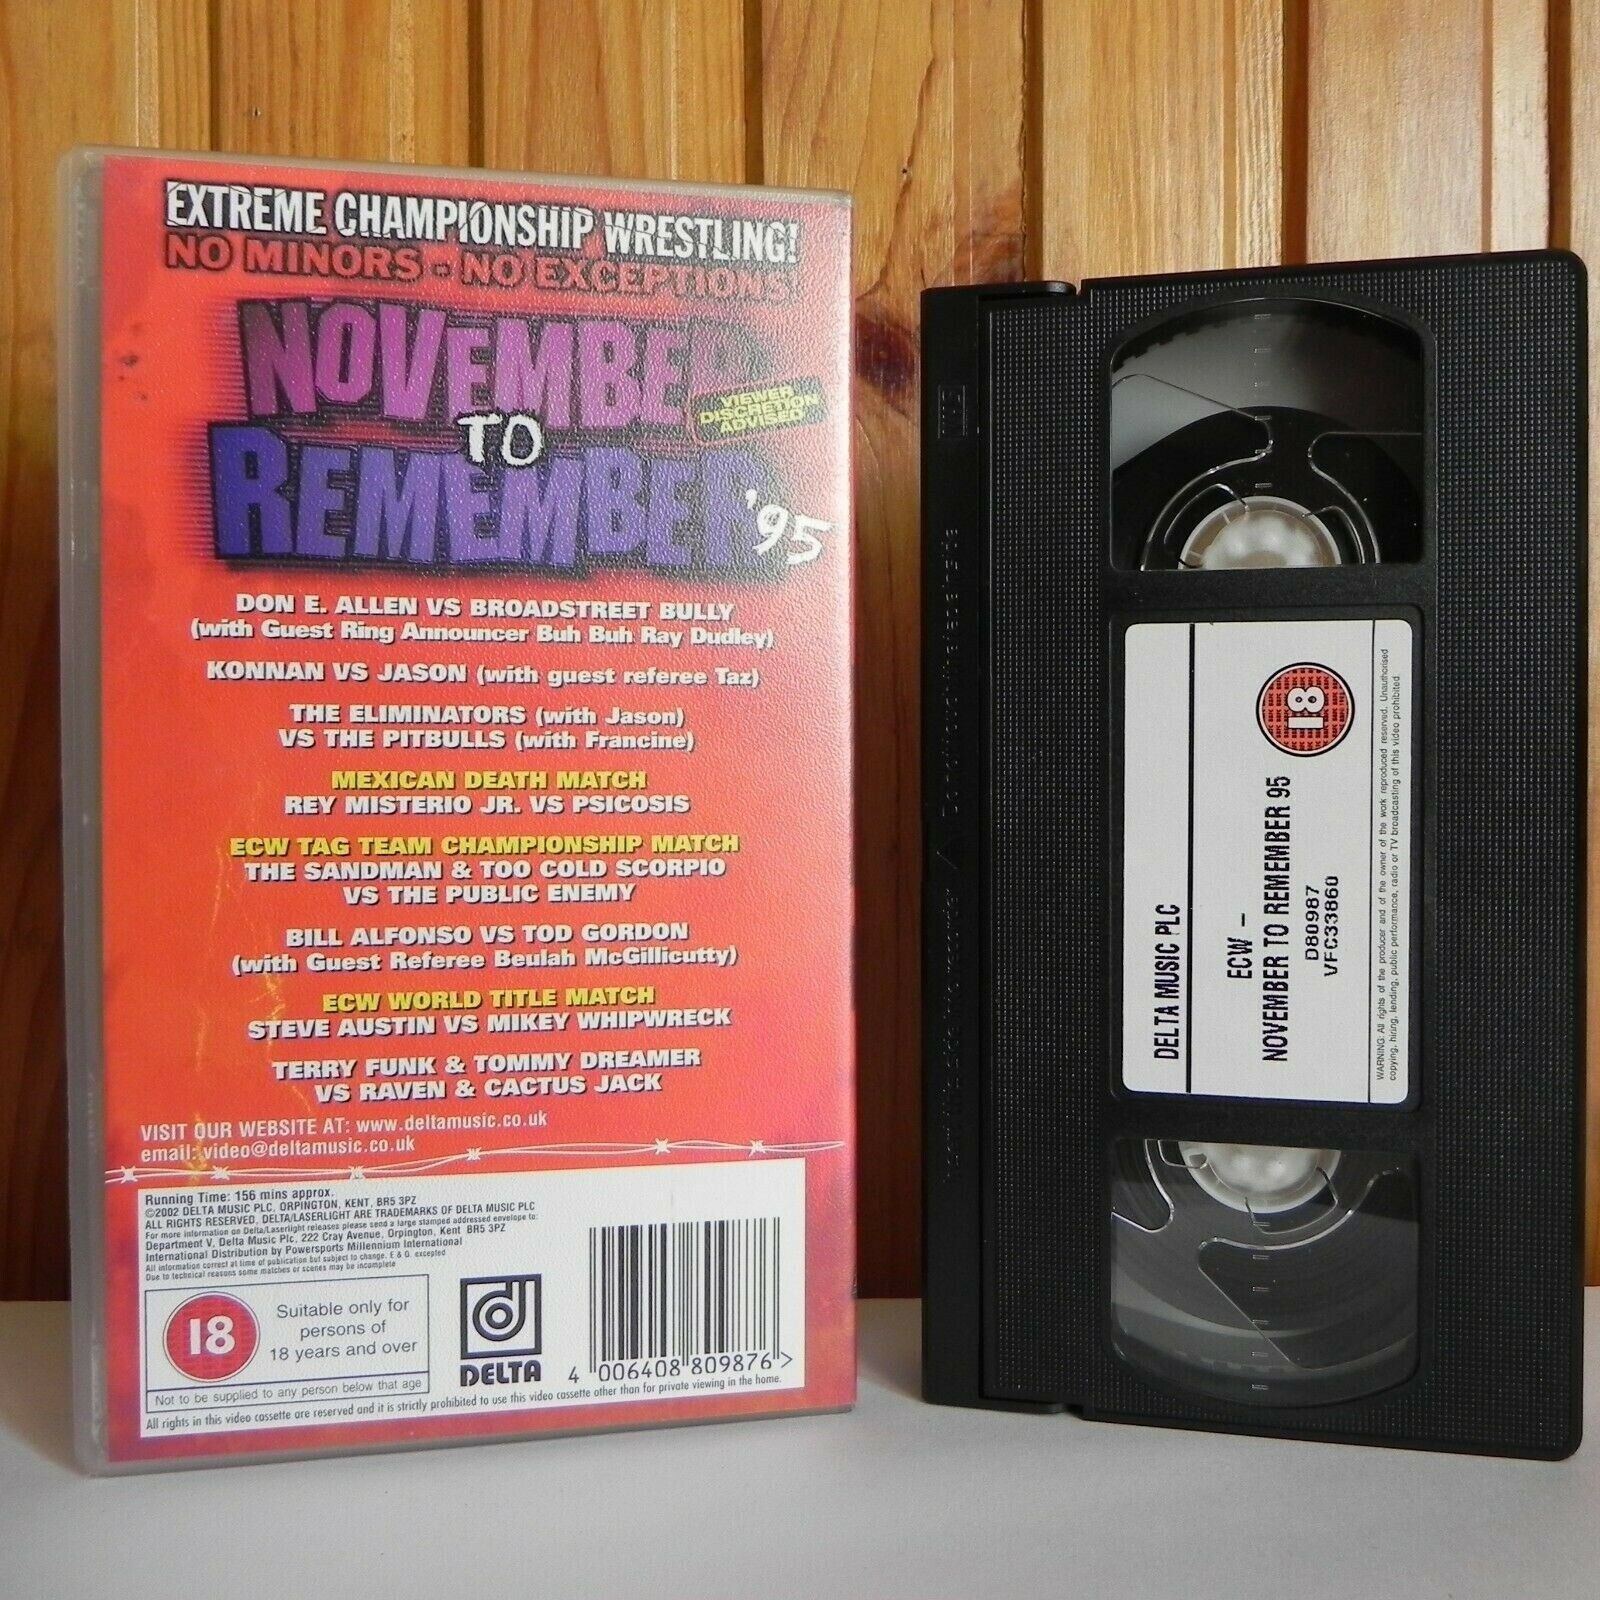 November To Remember'95 - Extreme Championship Wrestling - Cert (18) - Pal VHS-